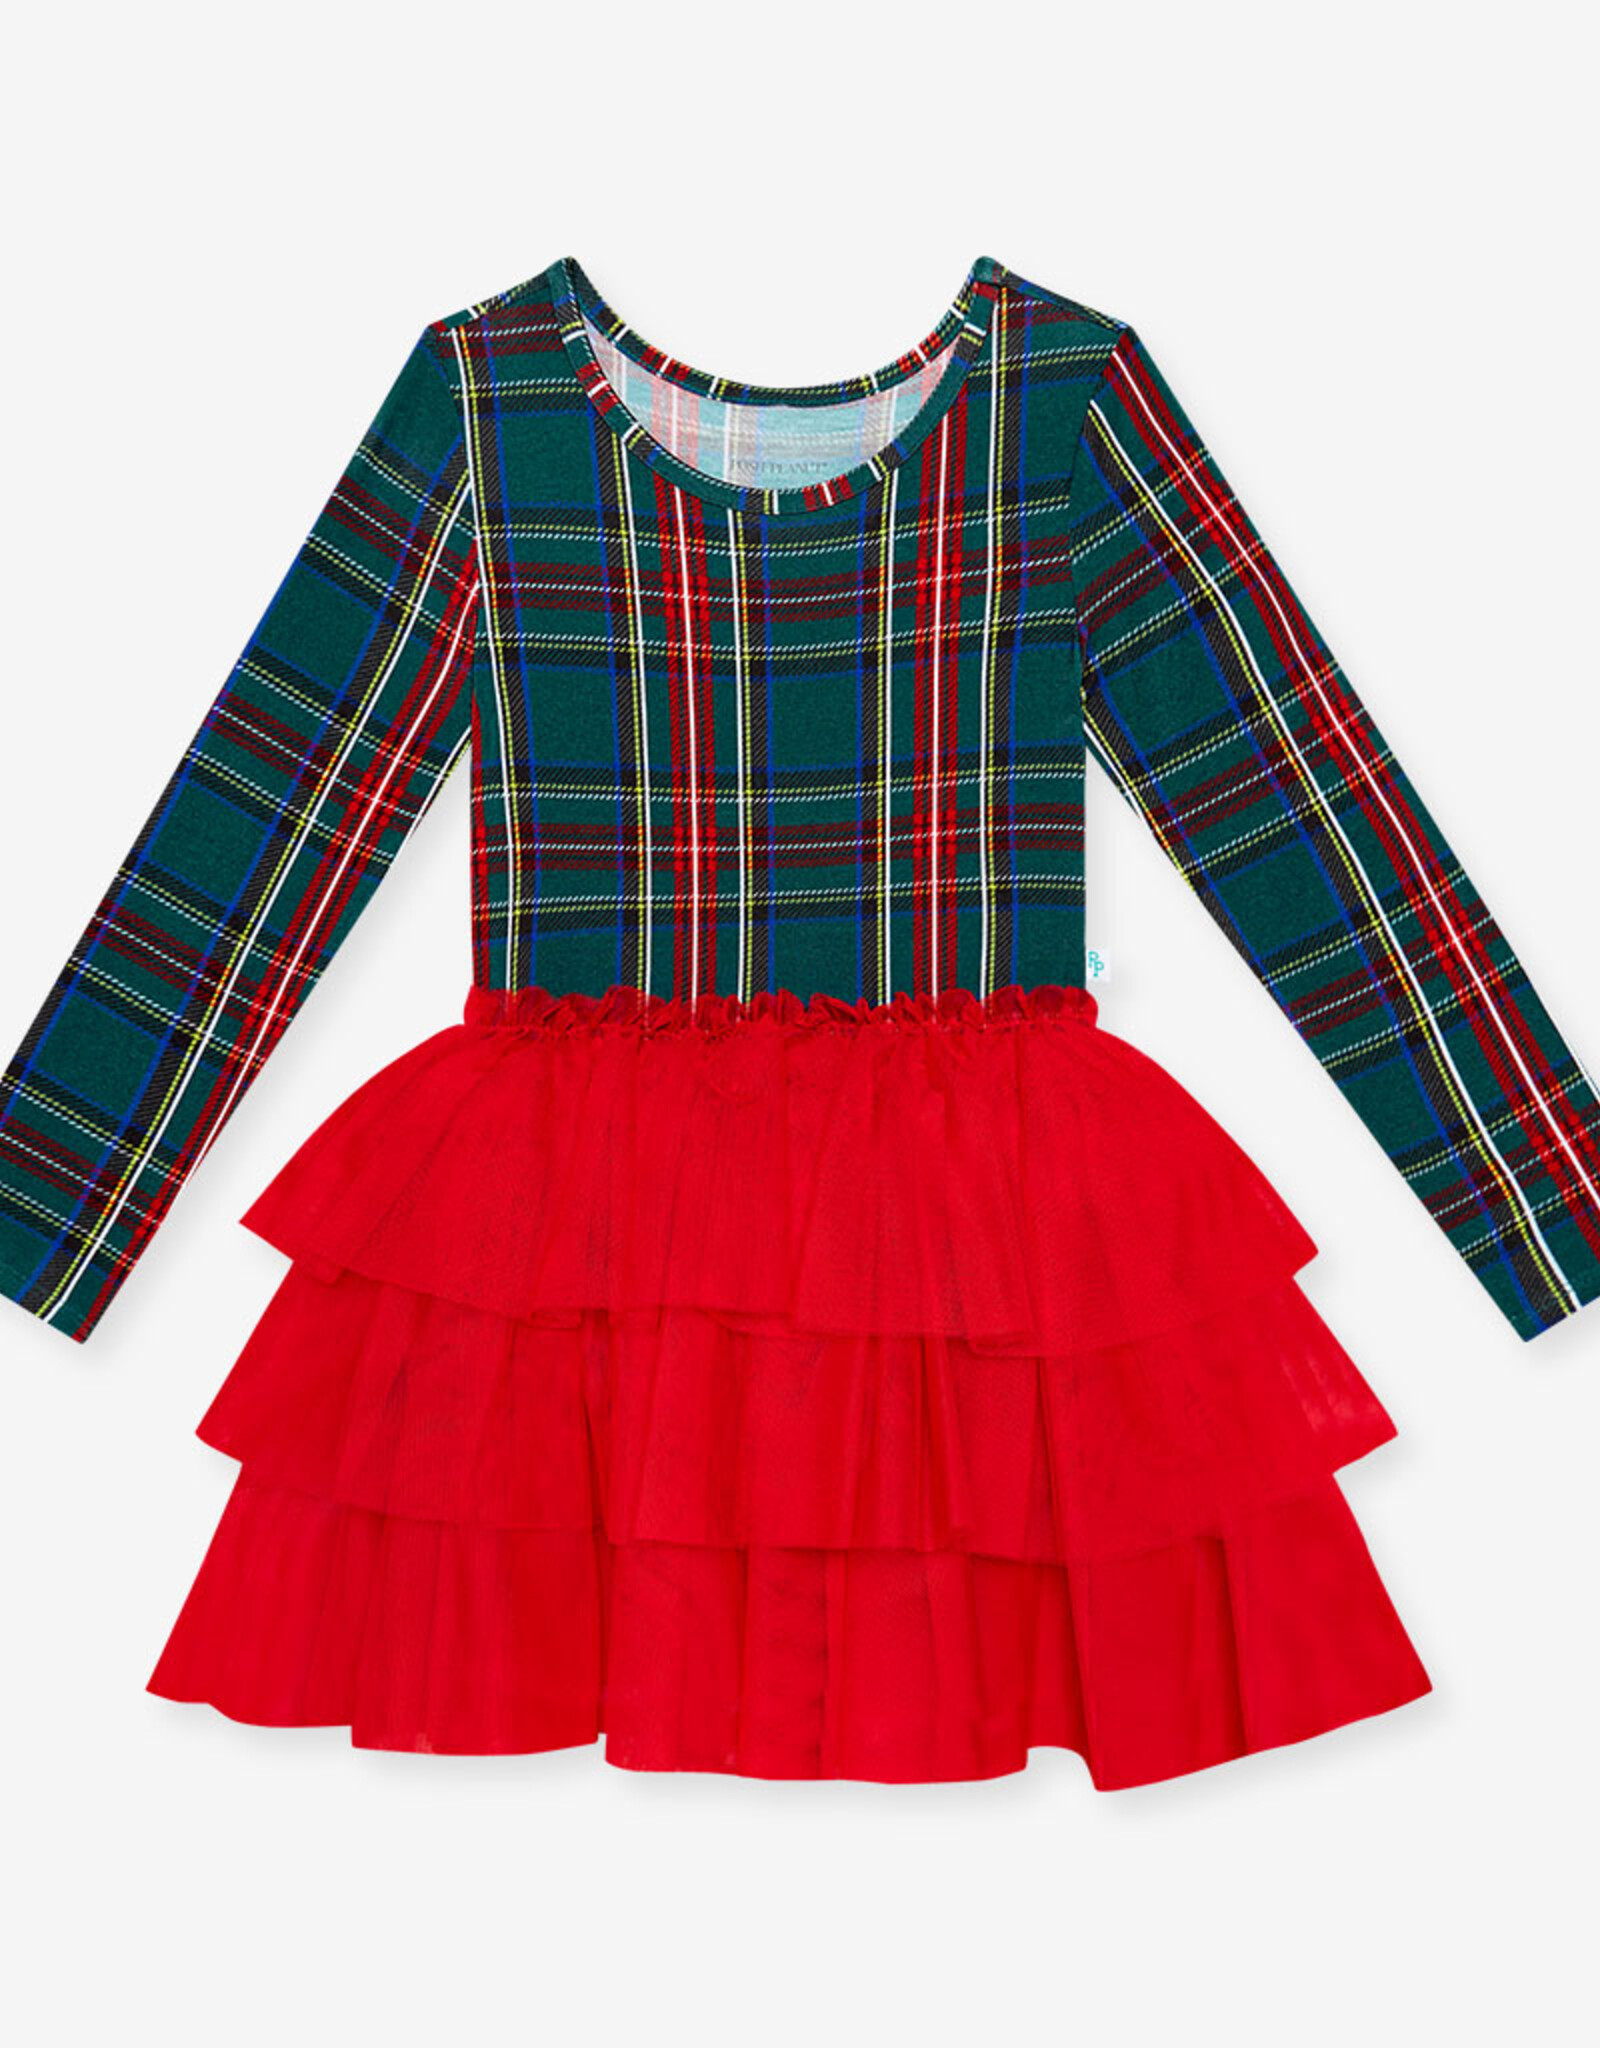 Winter Toddler Baby Girls Clothes Plaid Coat Tops+Tutu Dress